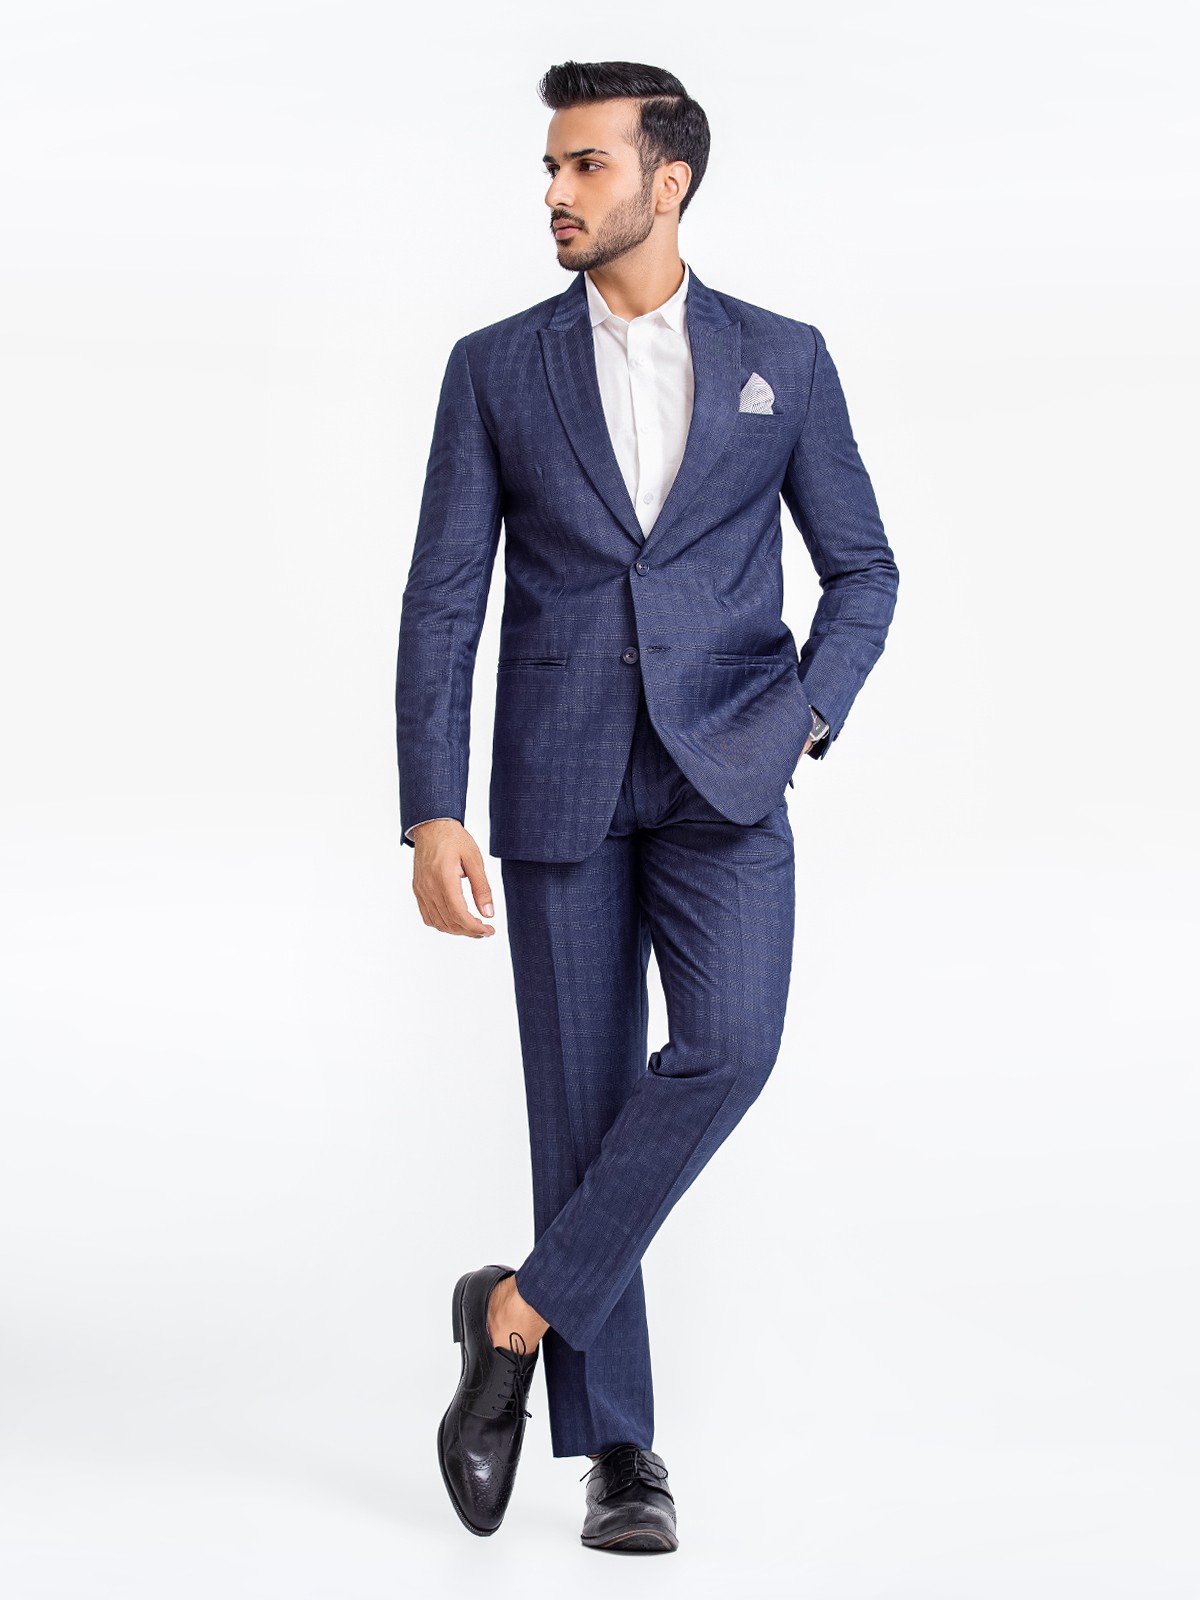 Coat Pant For Men Wedding | Myperfectfit.in - James Marking - Medium